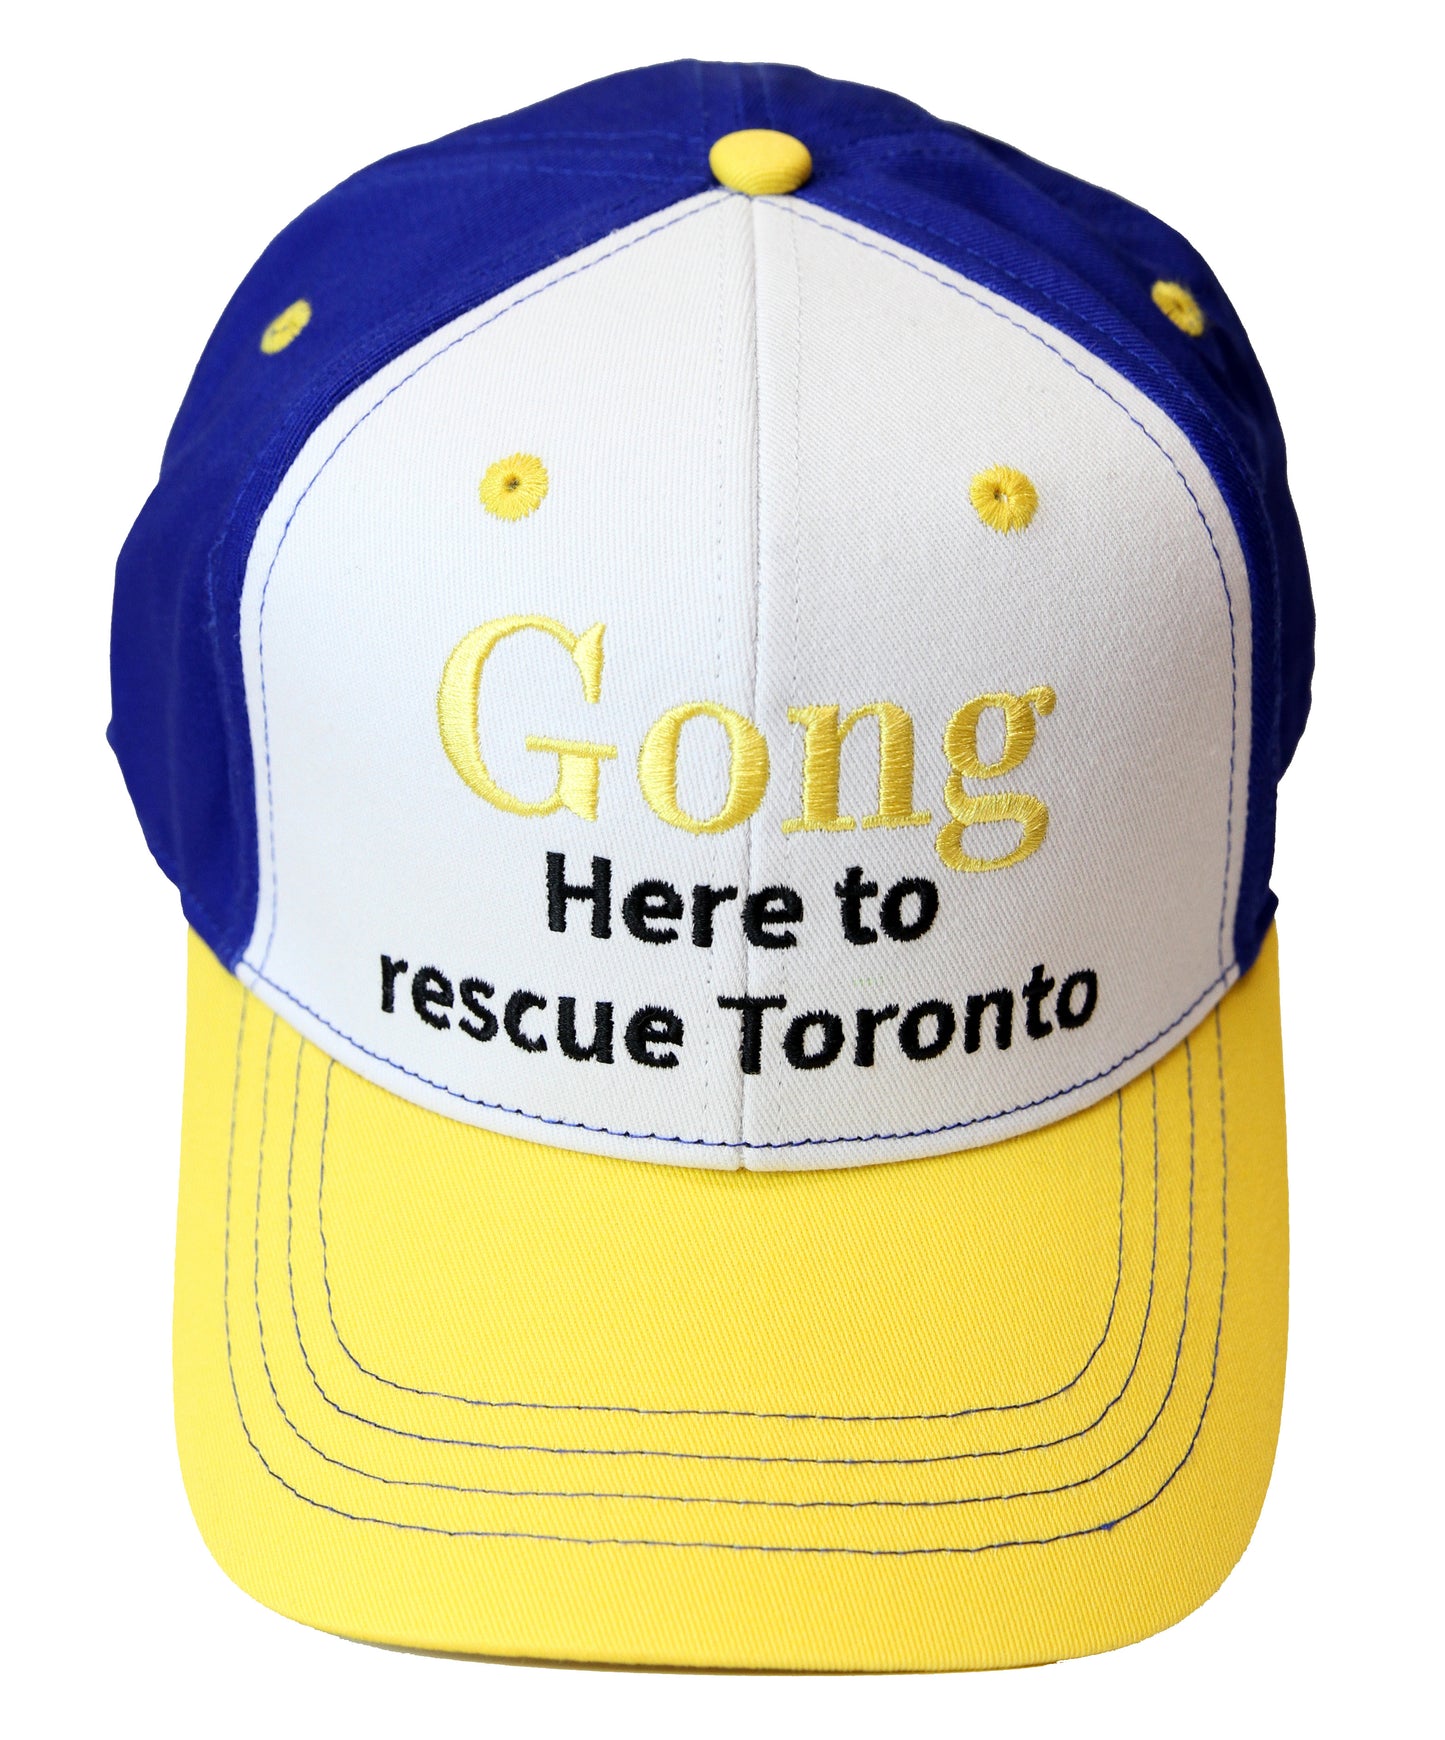 Here to rescue Toronto (Yellow)